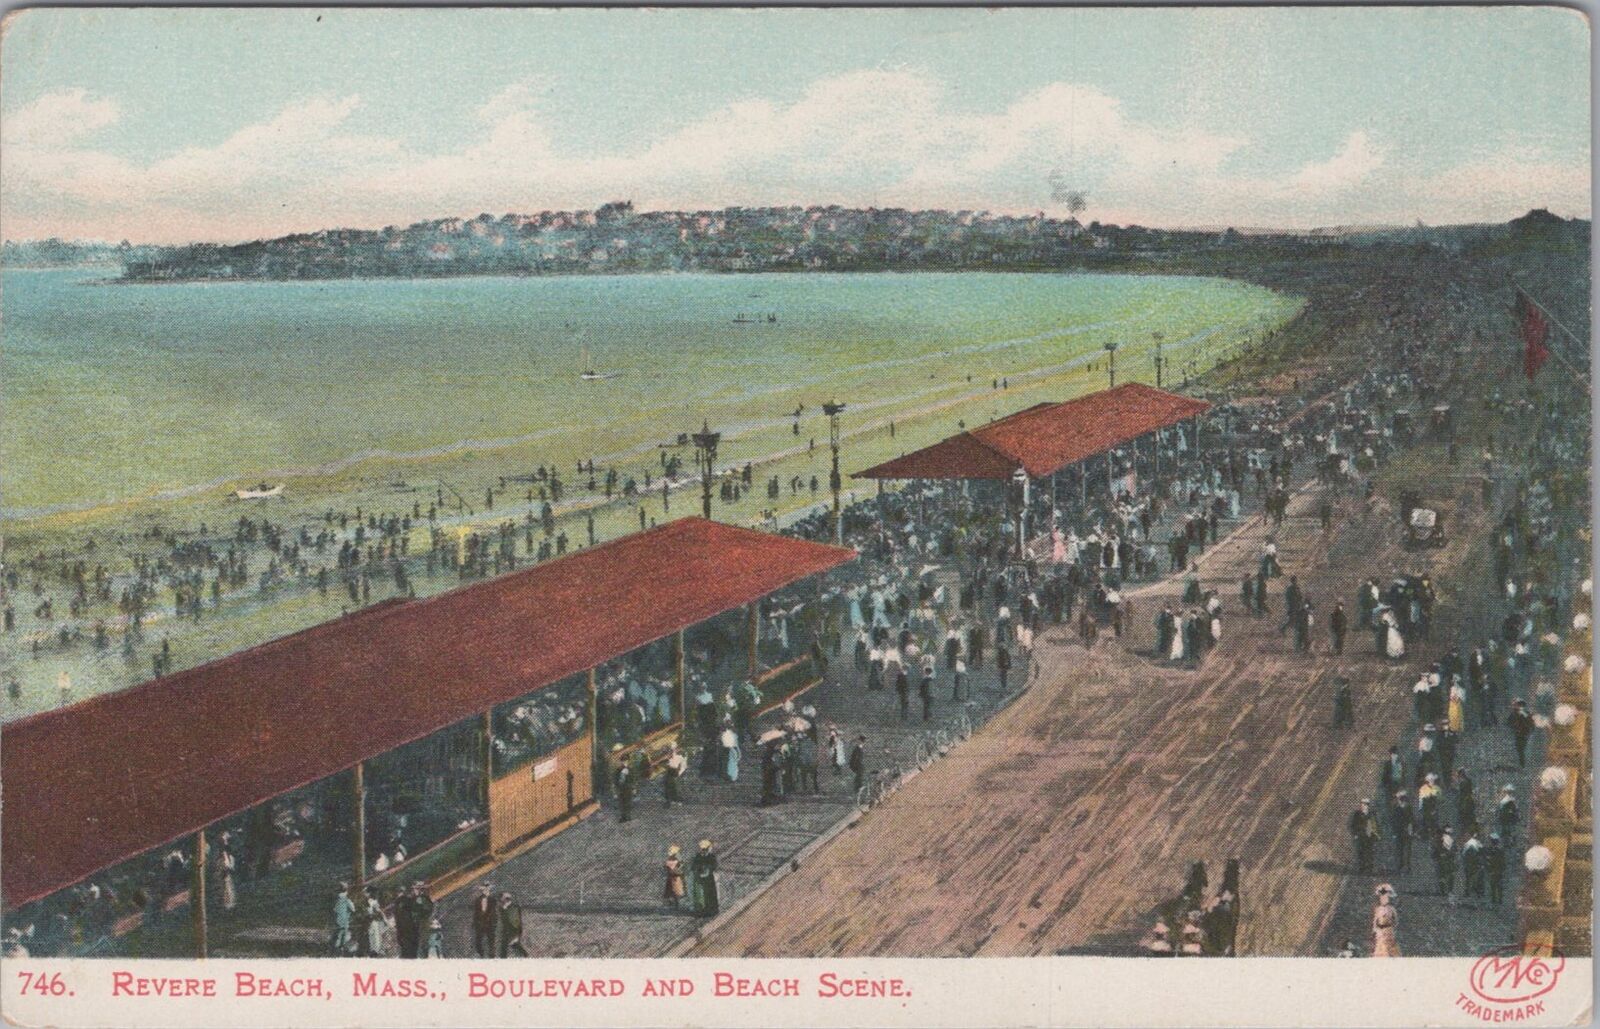 Revere Beach Boulevard and Beach Scene Postcard